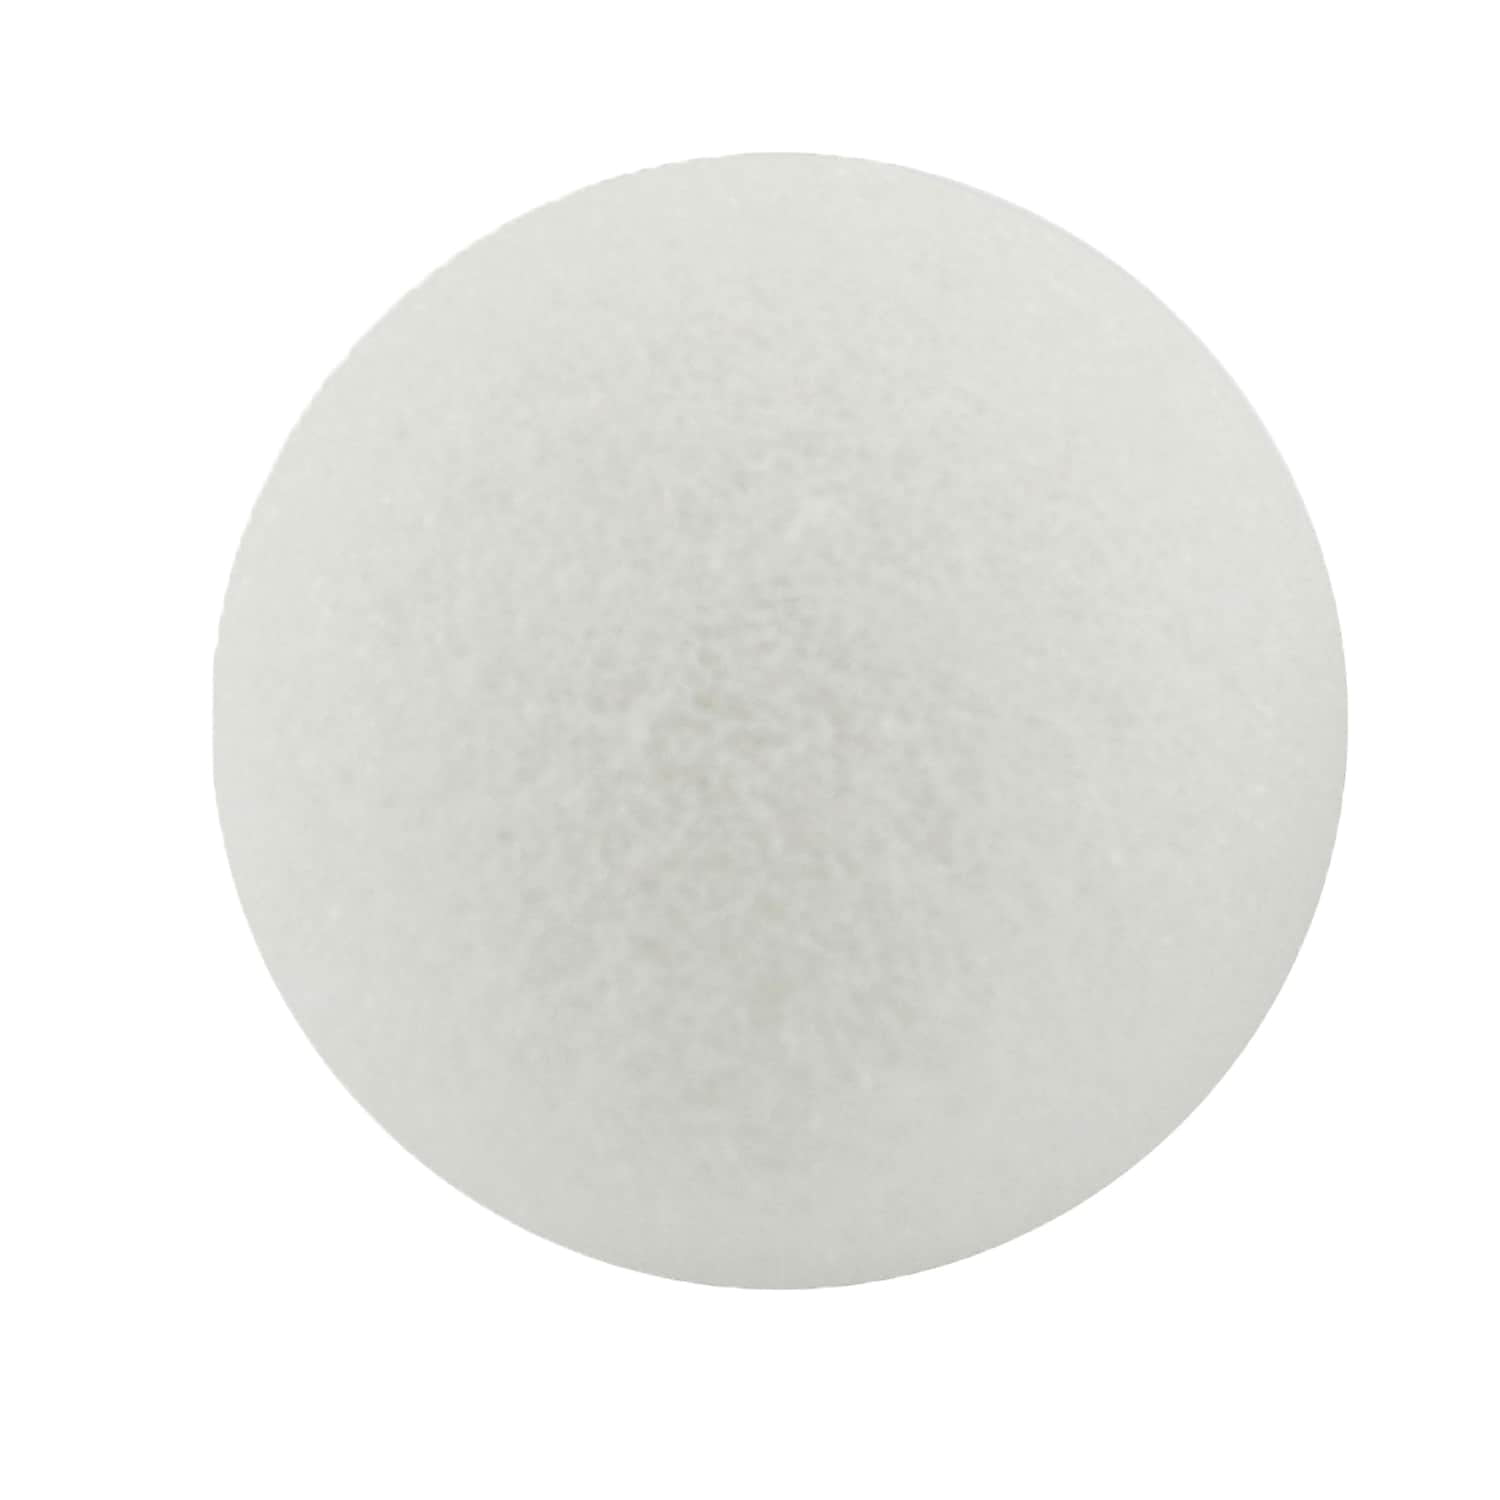 Styrofoam™ Balls, 4 inch, Pack of 12 